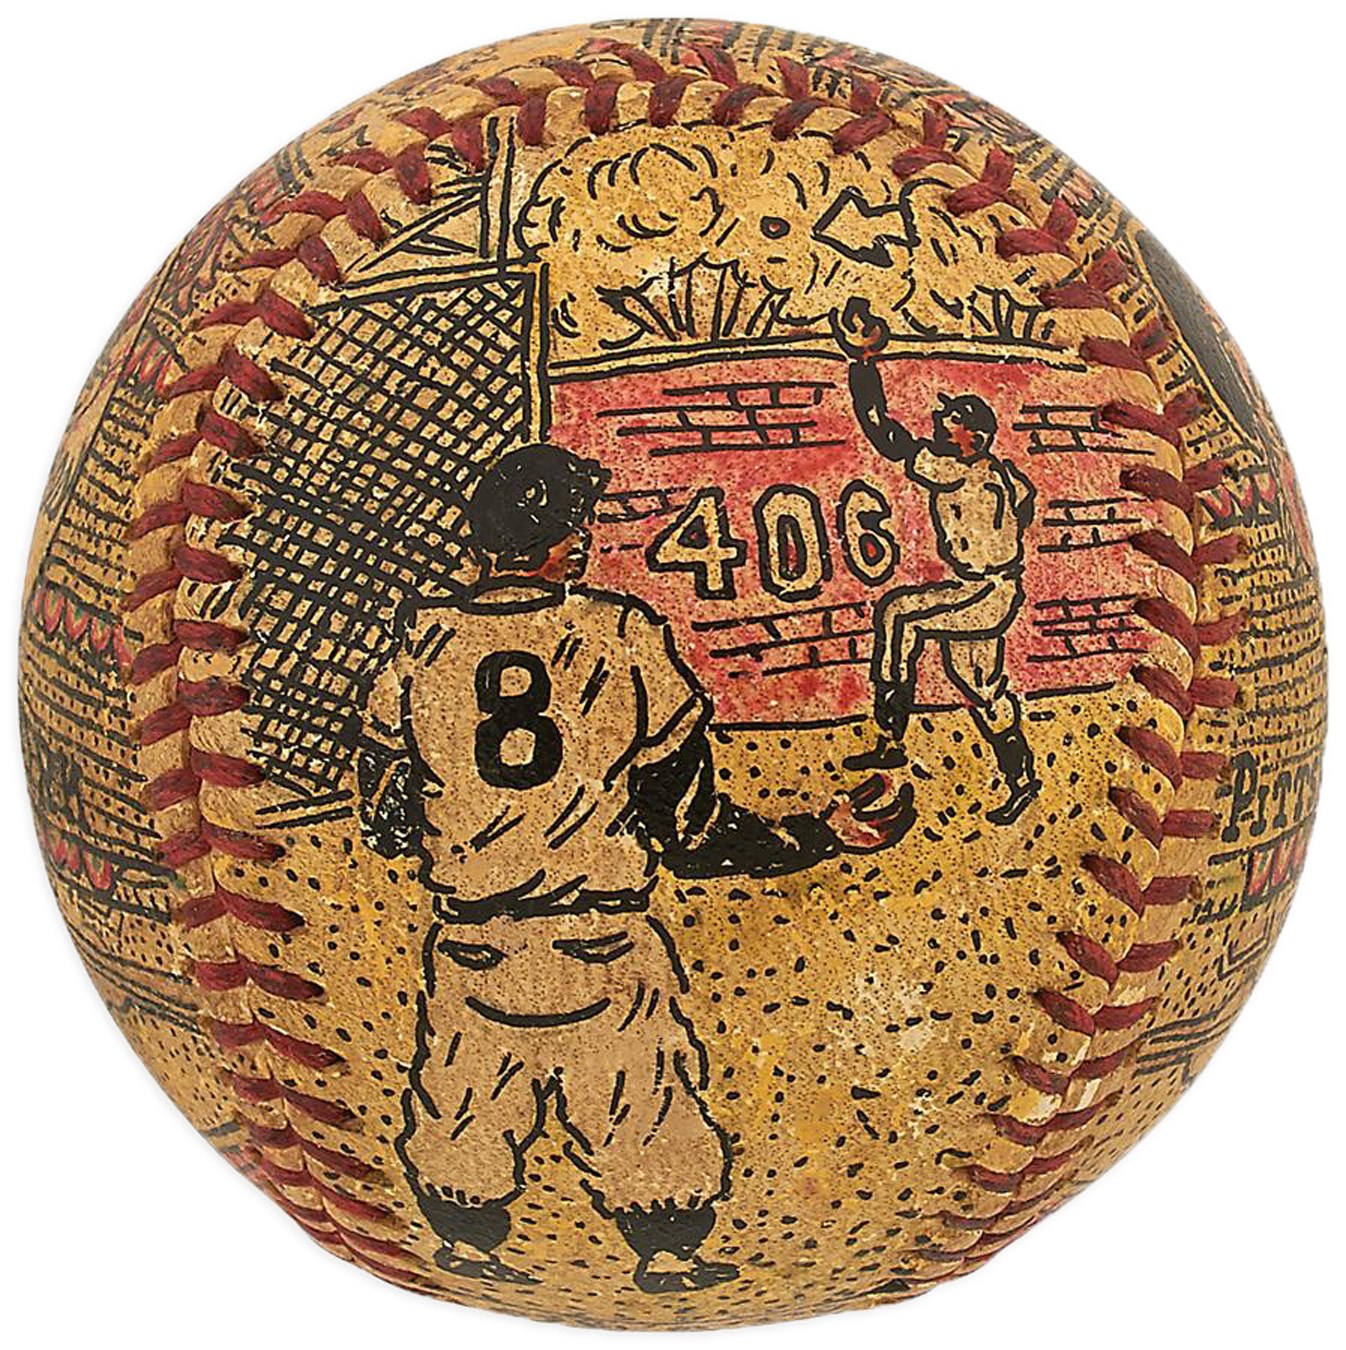 1960 World Series Folk Art Painted Baseball by George Sosnak